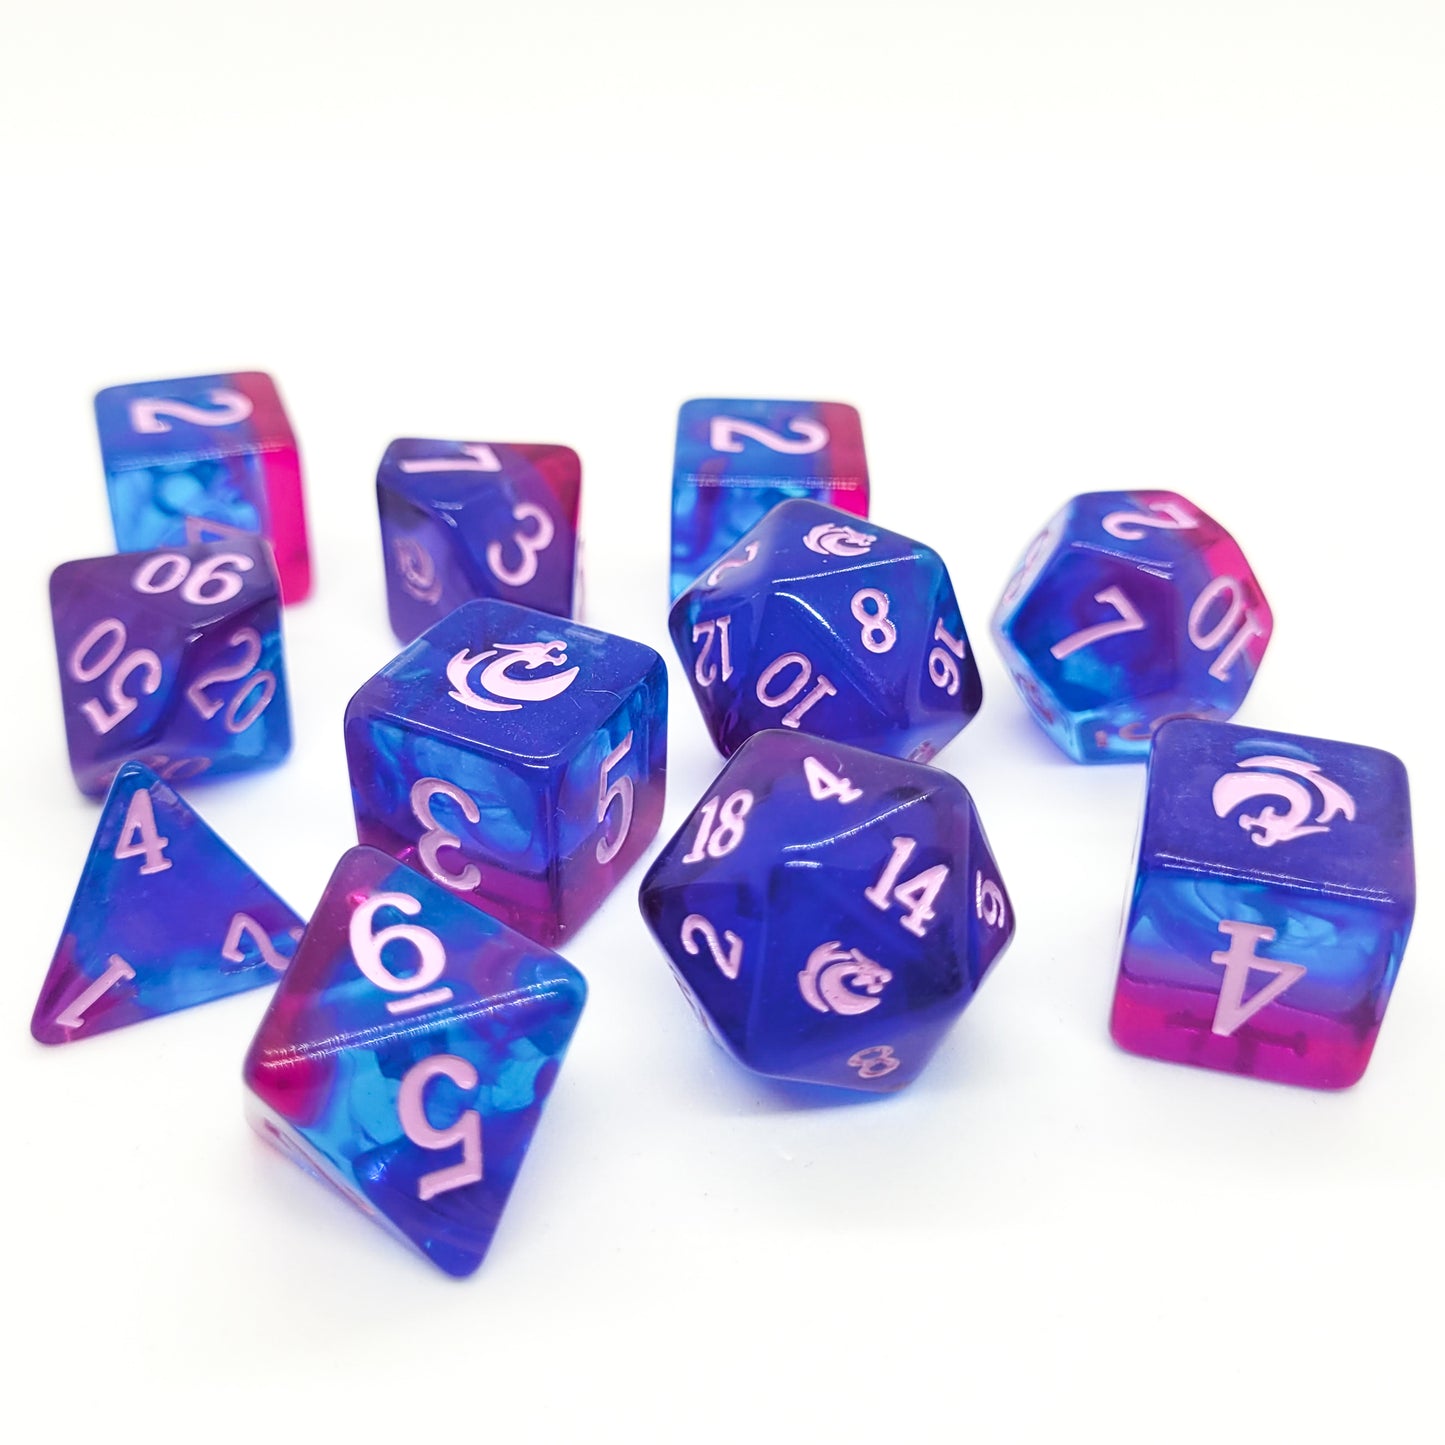 Mystic Storm from Mystic Dragon Games - 11-piece dice set